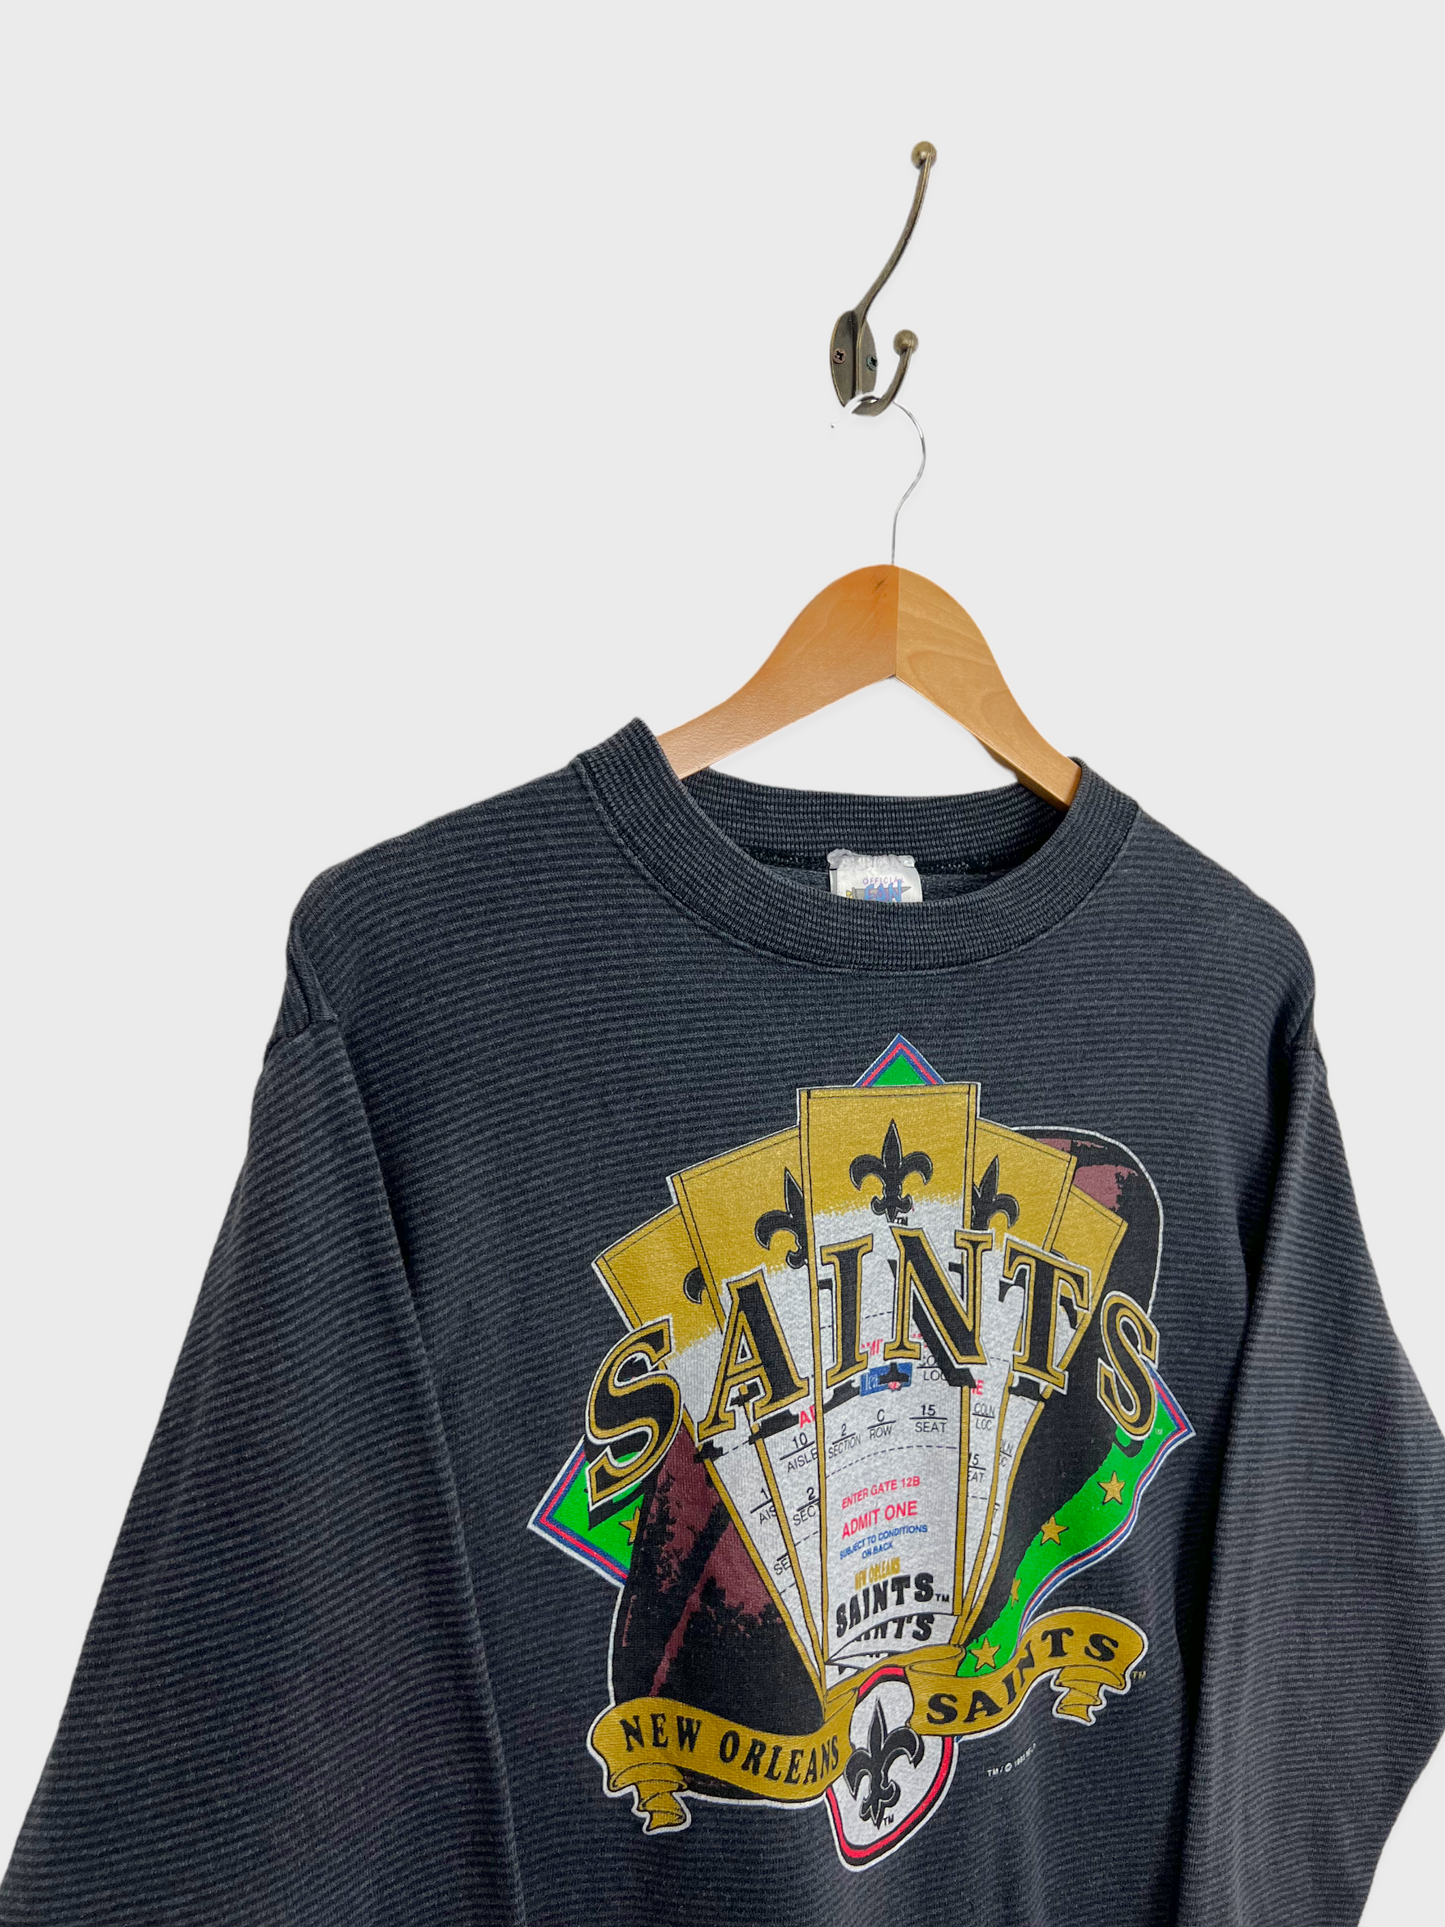 1993 New Orleans Saints NFL USA Made Vintage Sweatshirt Size 6-8